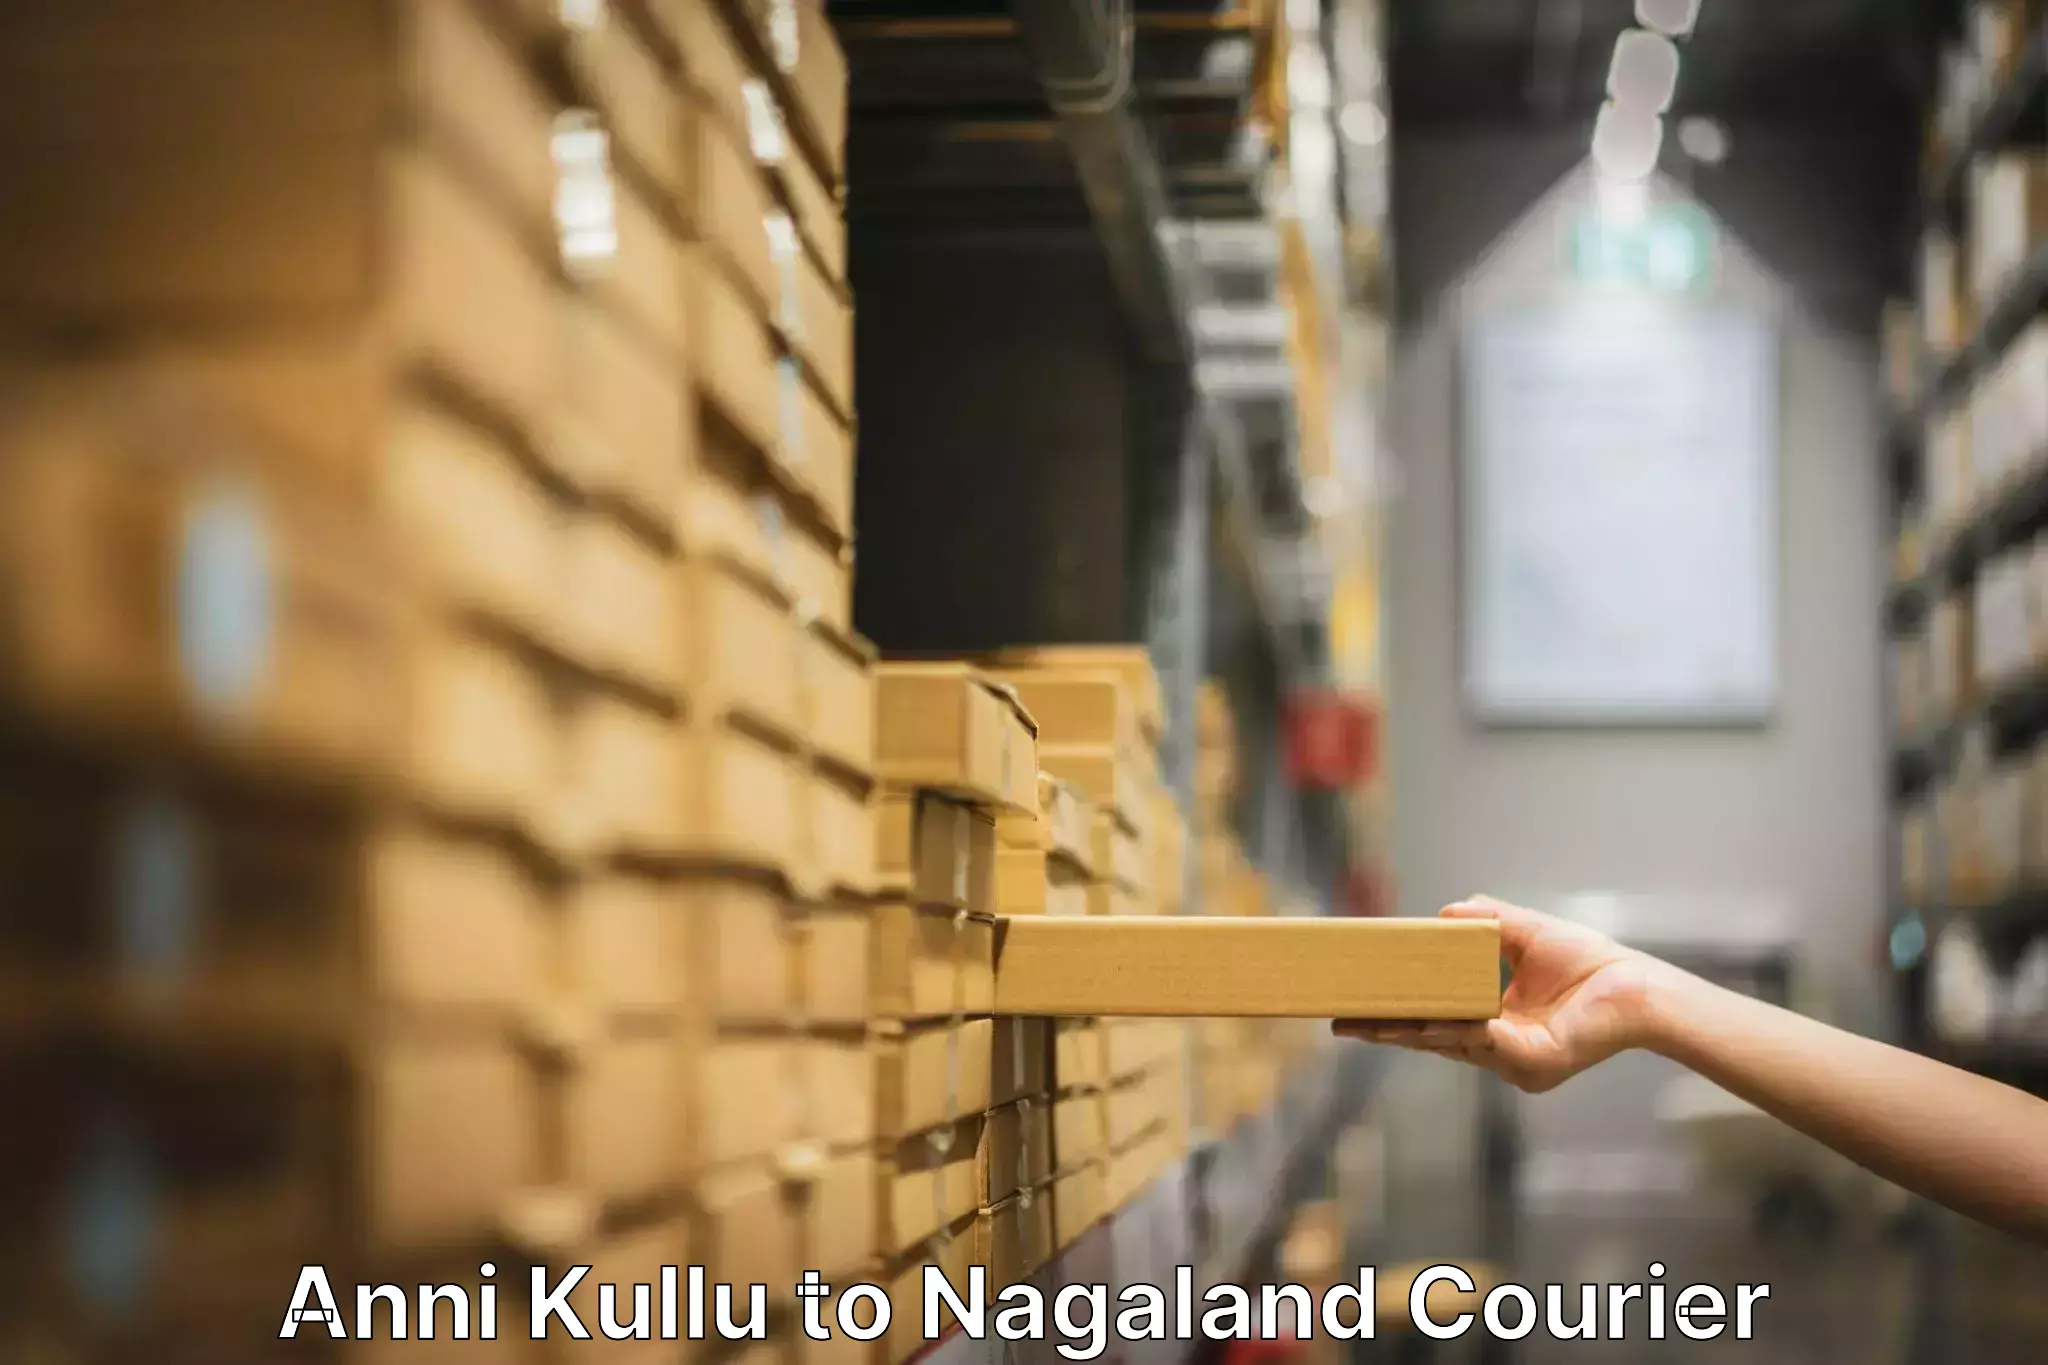 Professional moving company Anni Kullu to Nagaland